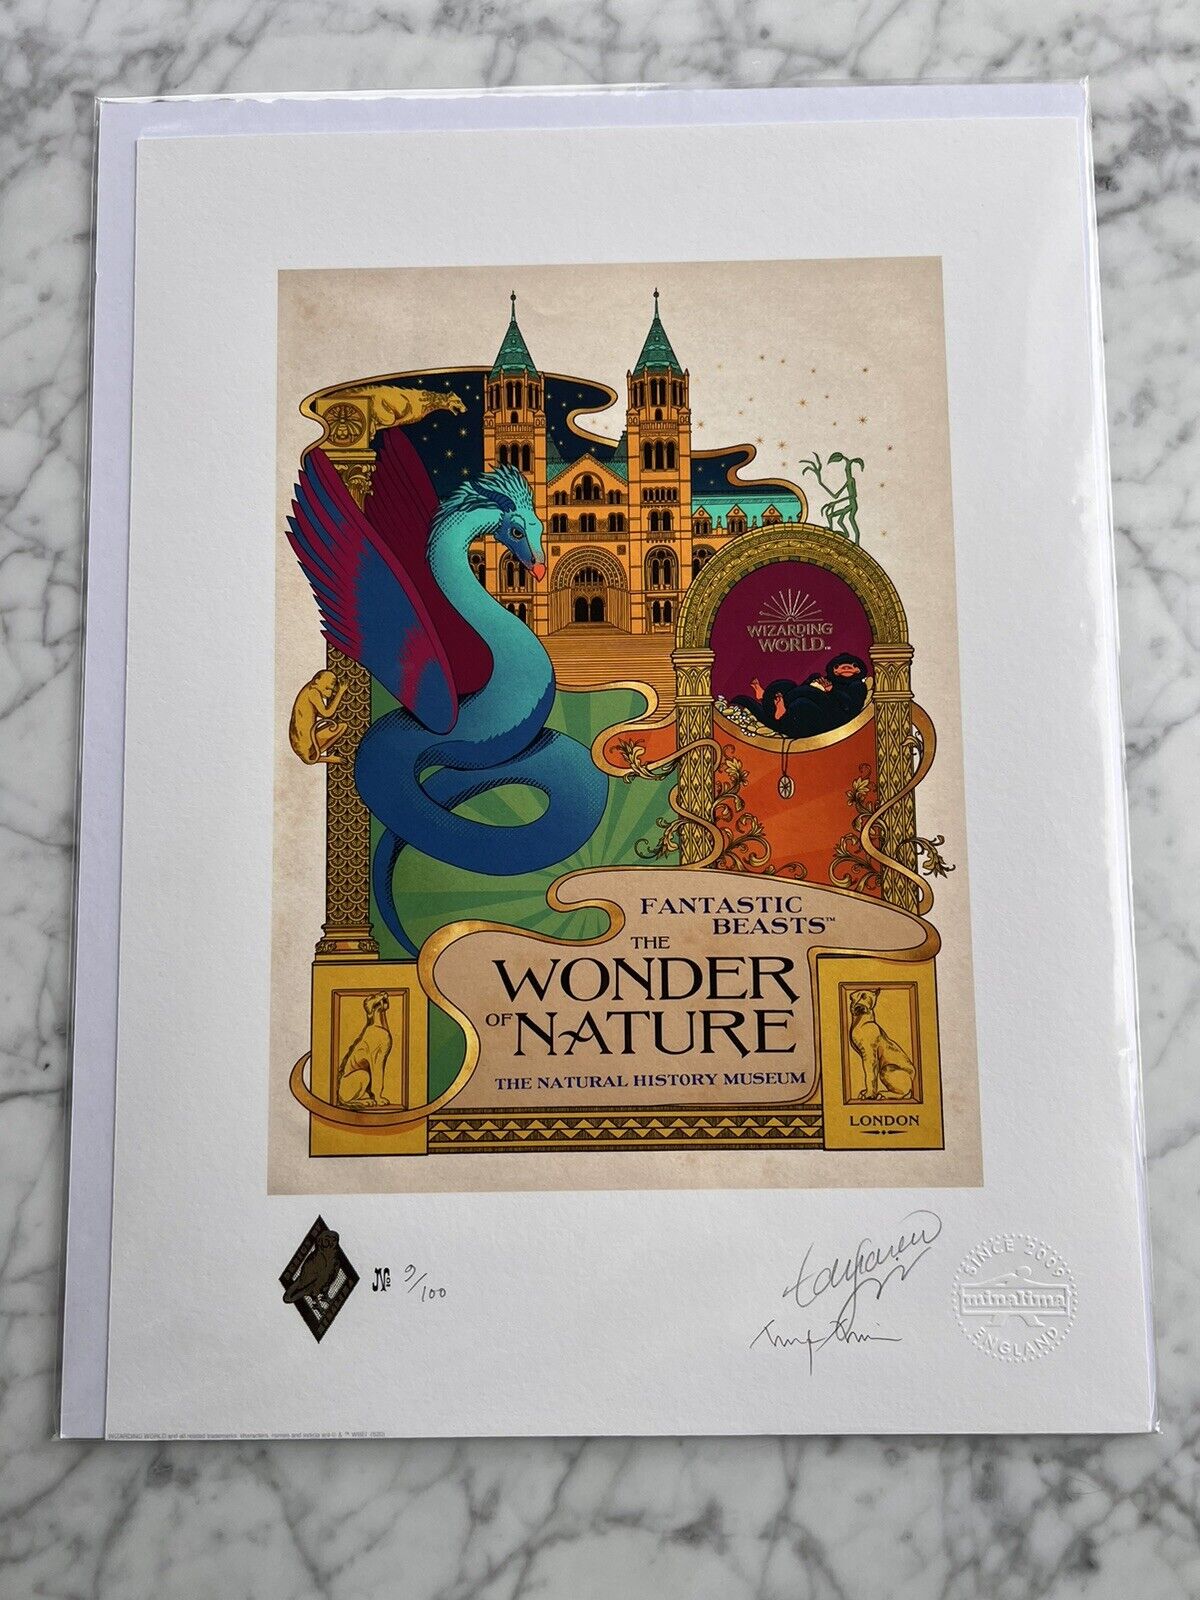 Minalima Harry Potter / Fantastic Beasts Limited Signed Art Print